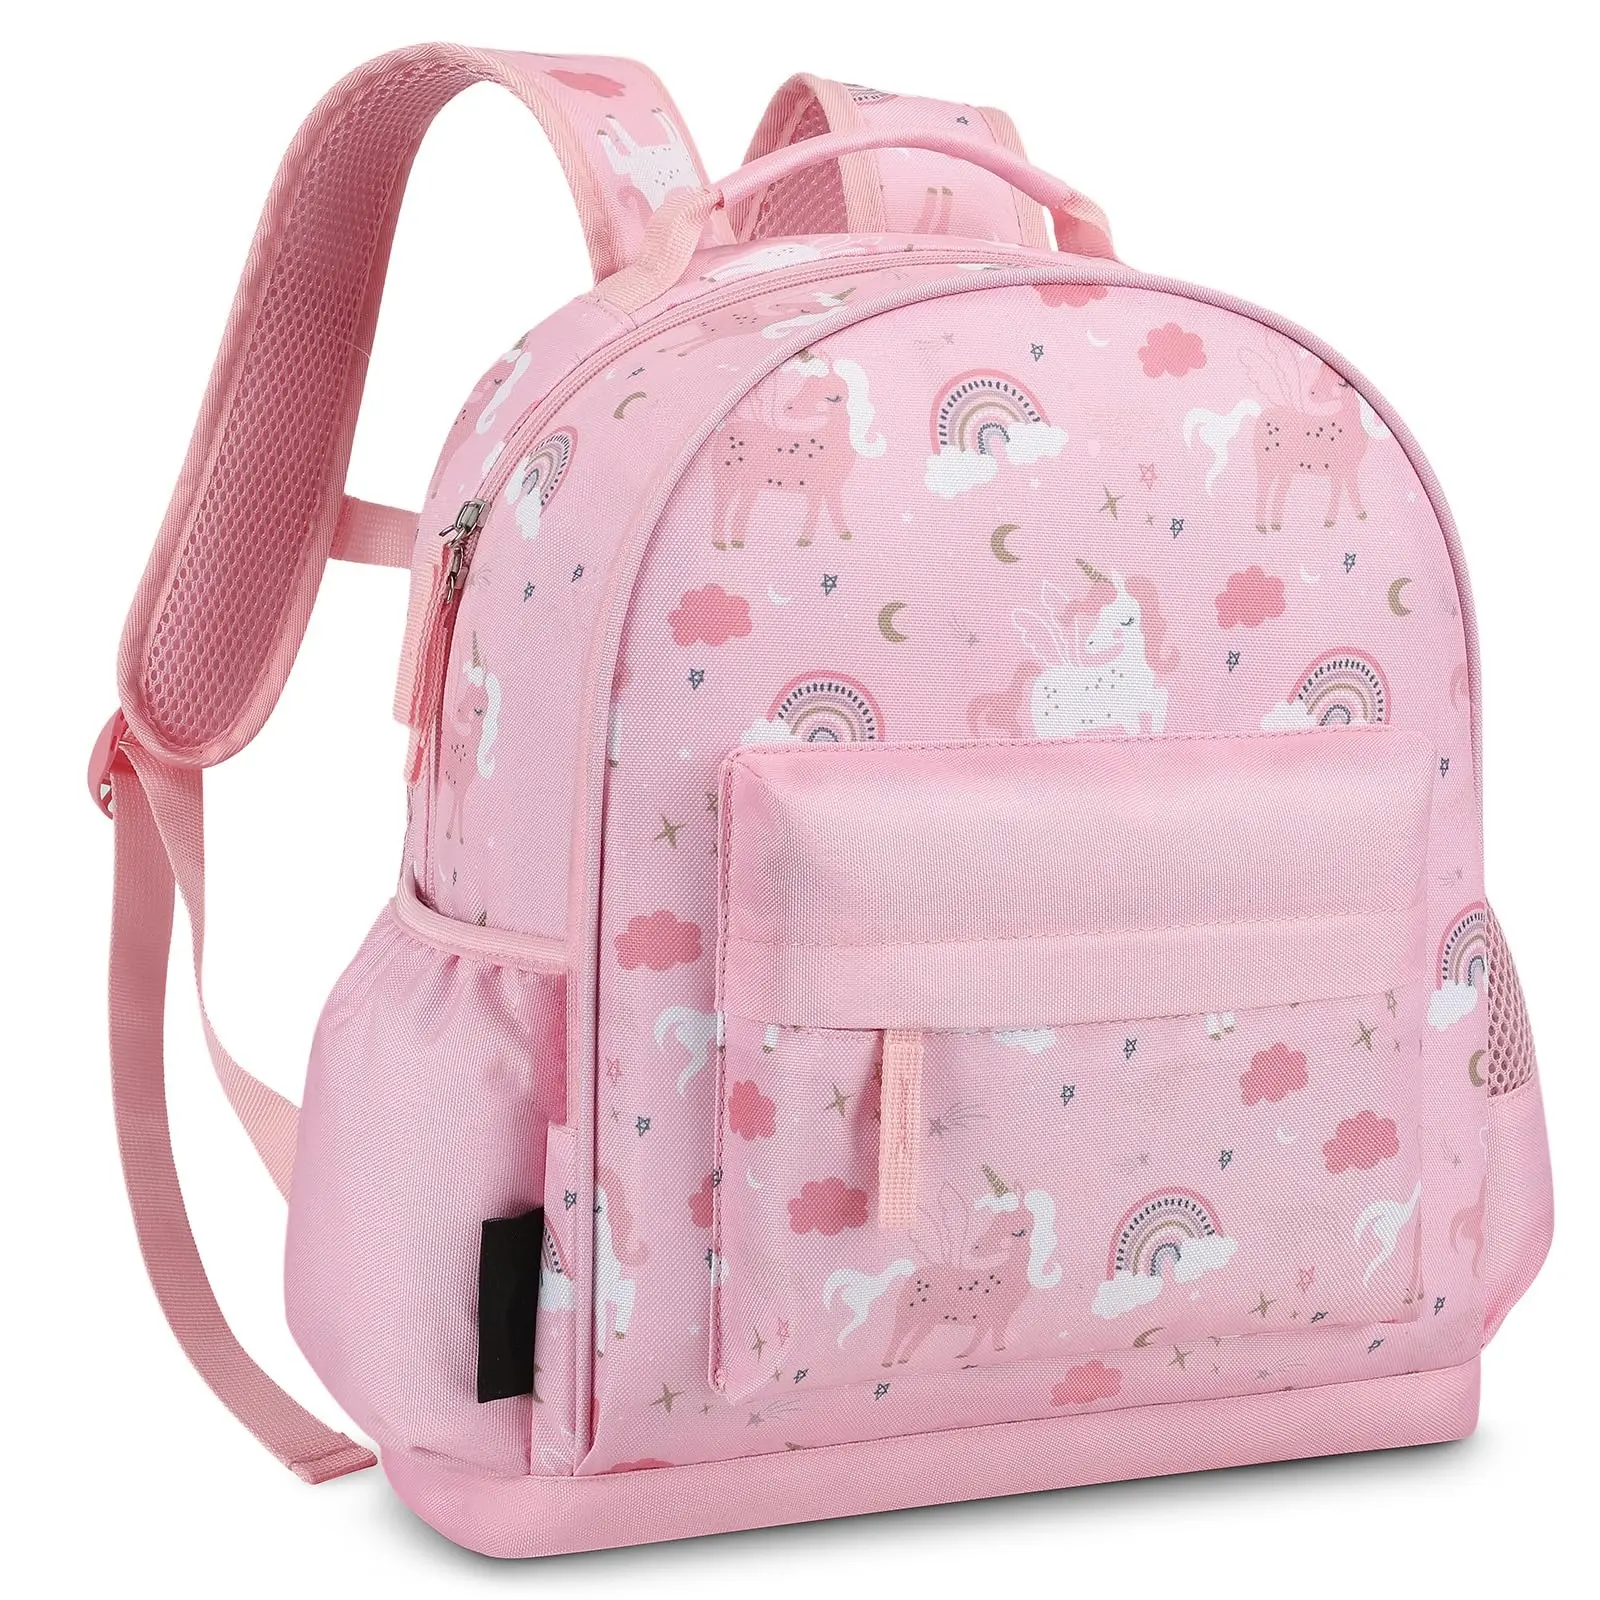 Tas punggung anak balita, ransel sekolah Unicorn lucu tahan air ringan Mini harga grosir untuk Prasekolah